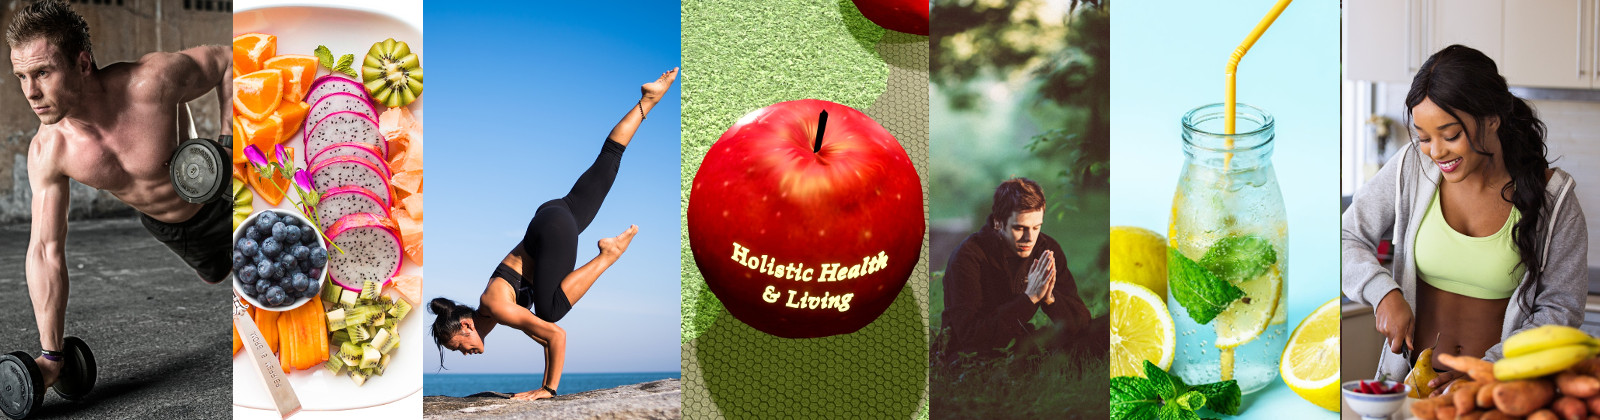 Holistic Health & Living